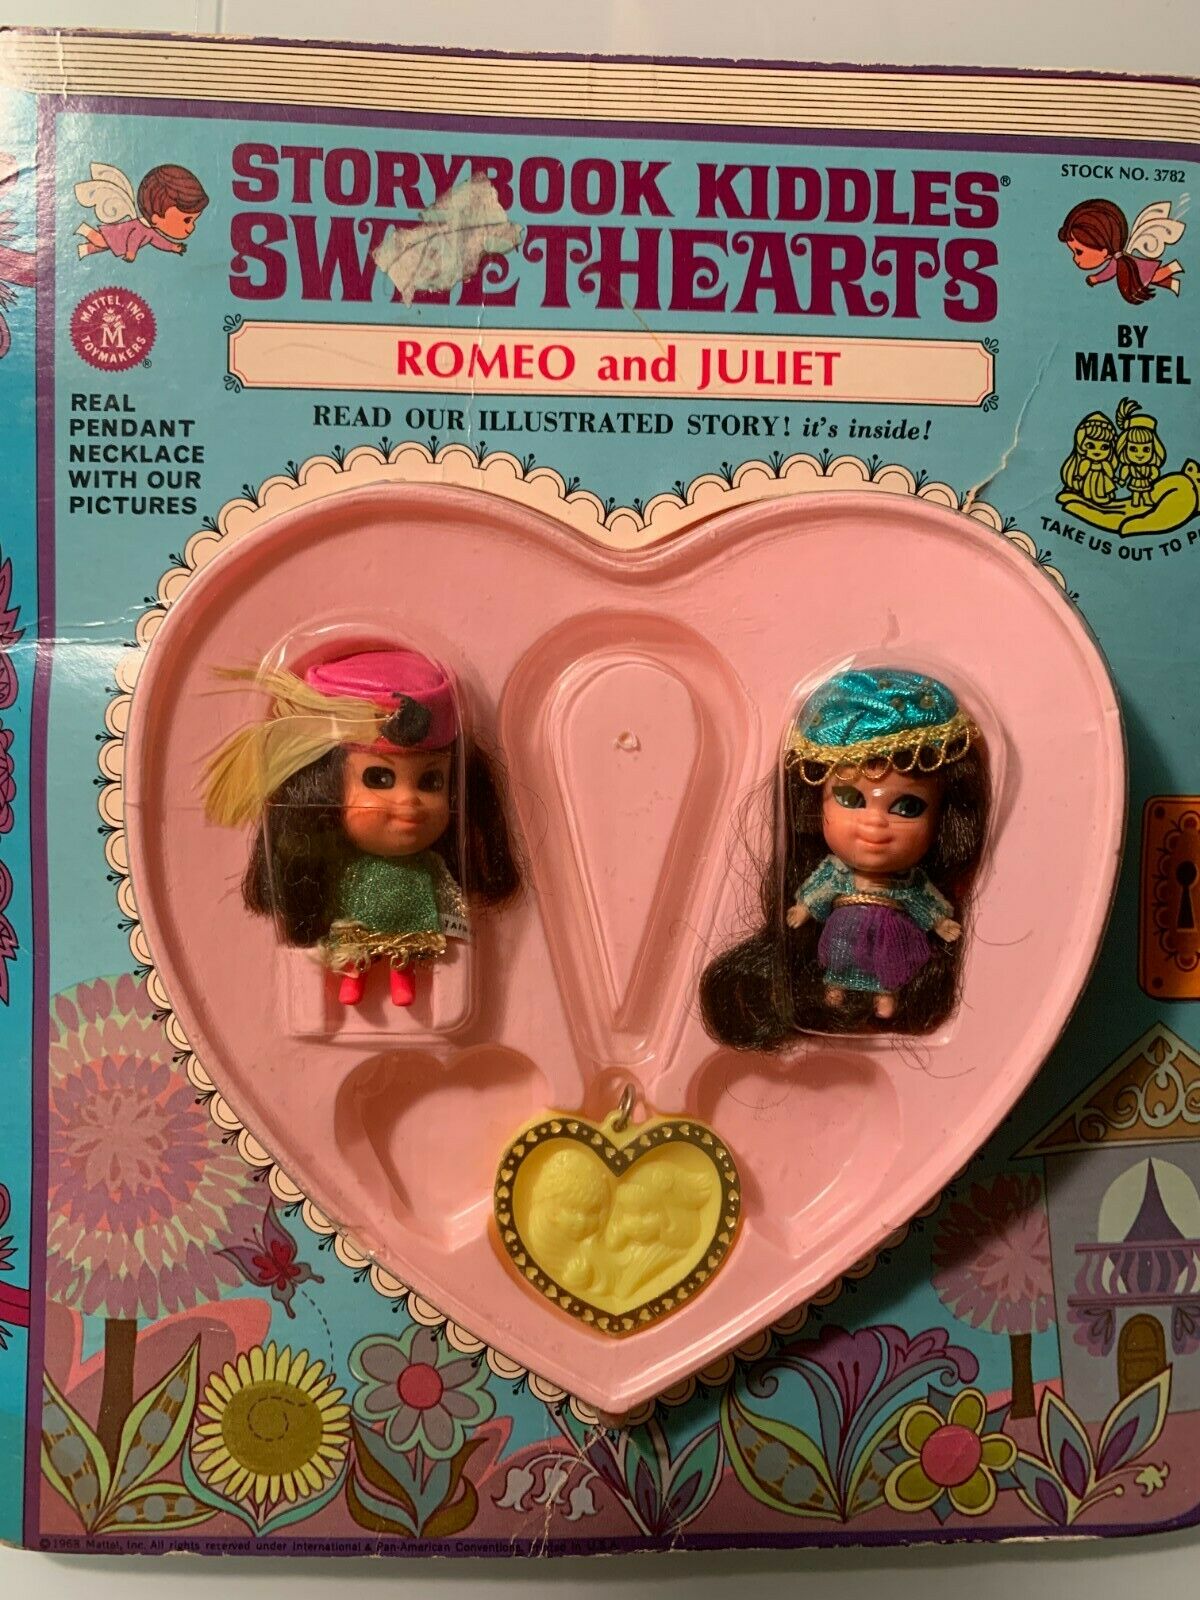 Vintage Mattel Storybook Kiddles Sweethearts Romeo And Juliet Free Shipping